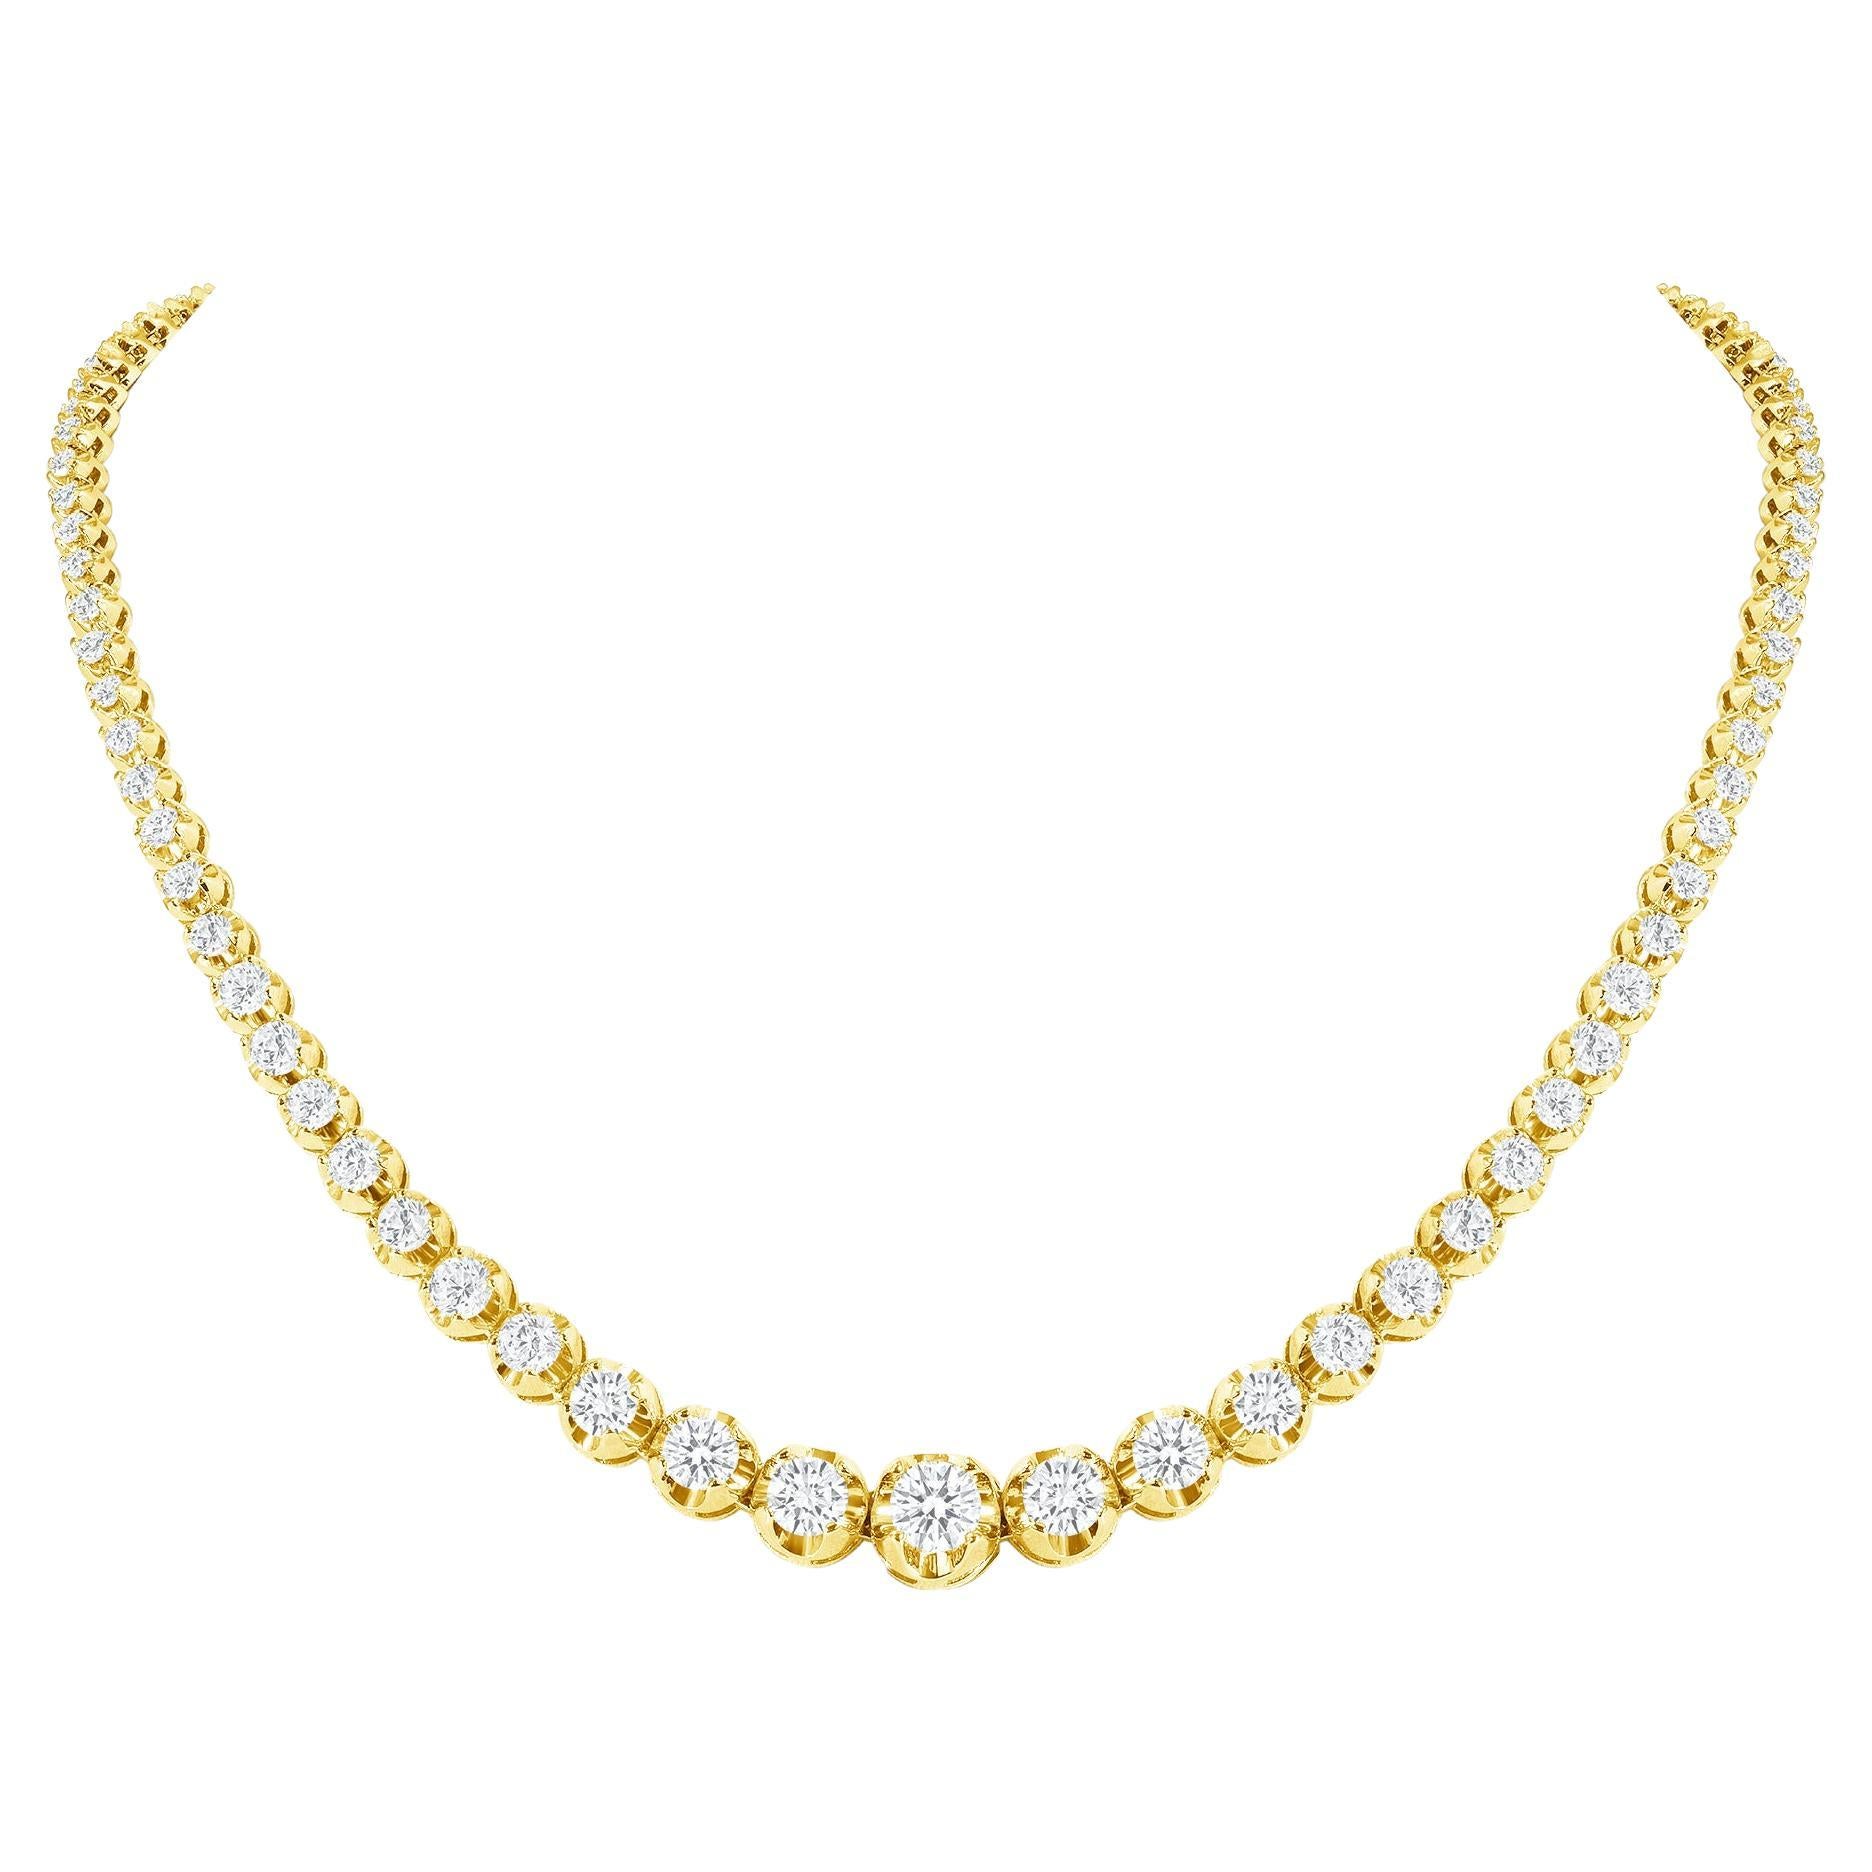 14k Yellow Gold 5Carat Graduated Diamond Tennis Necklace Illusion Setting For Sale